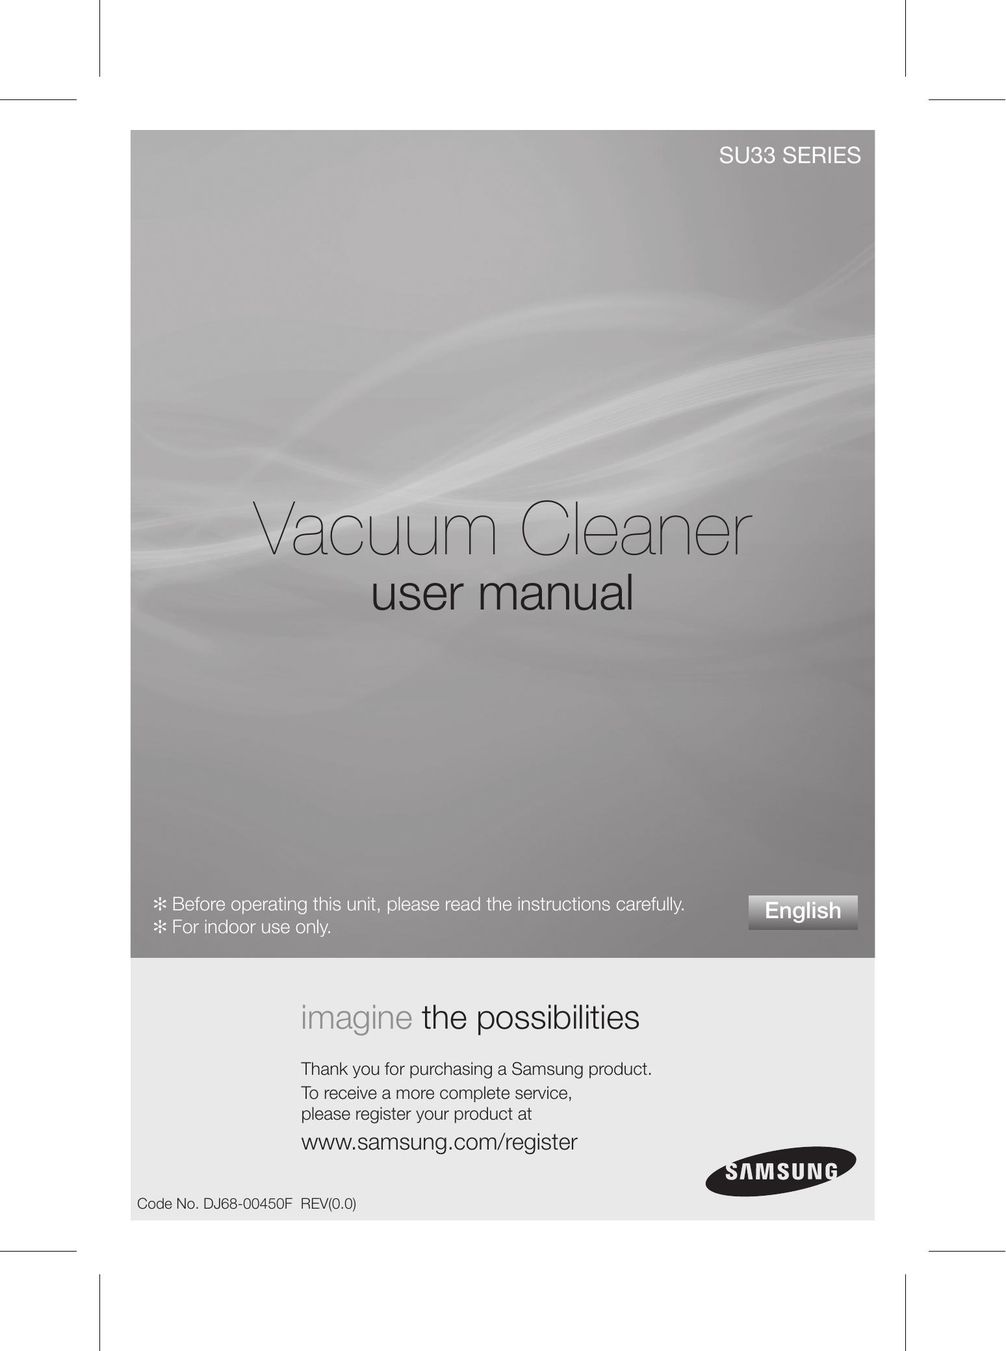 Samsung SU33 Series Vacuum Cleaner User Manual